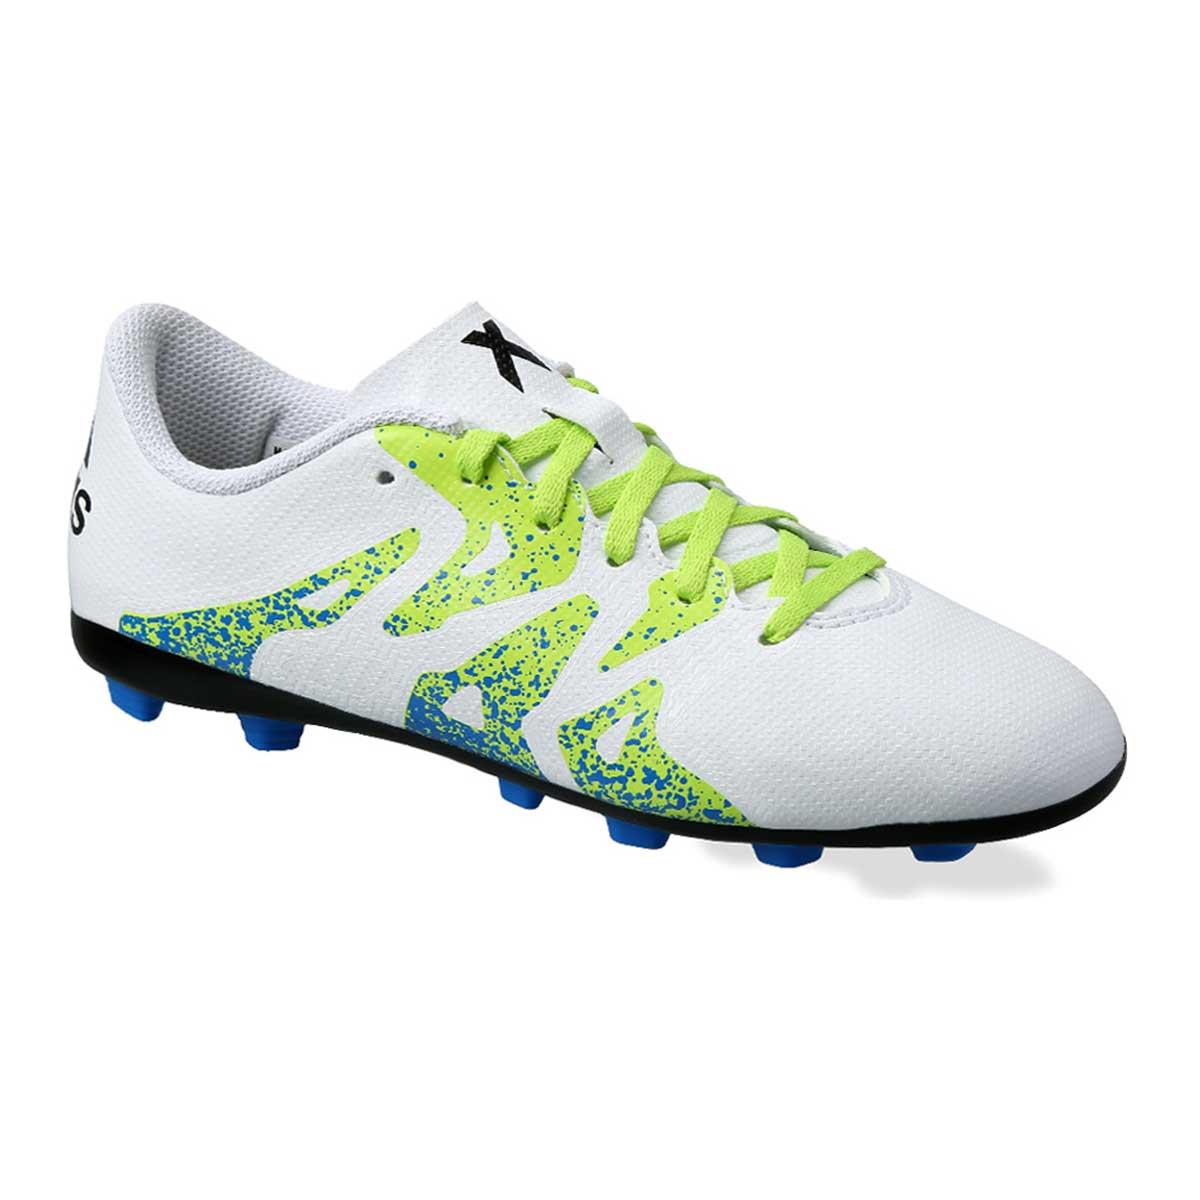 Buy Adidas 15.4 FXG Football (White/Green/Black) Online